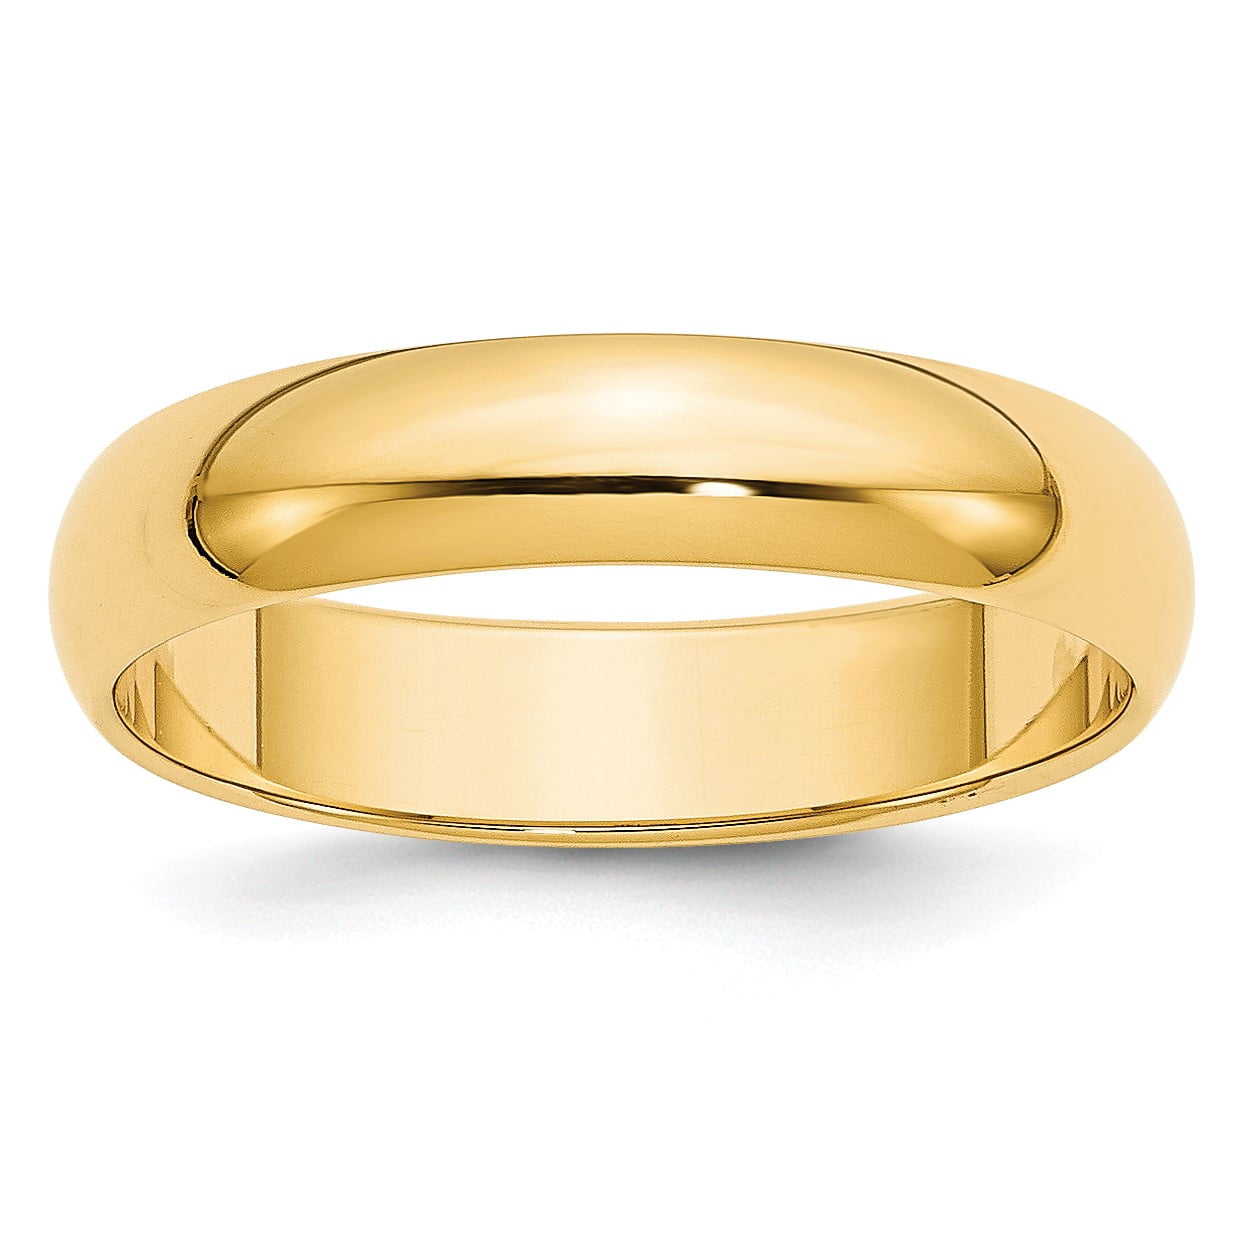 Bonyak Jewelry - 14k 5mm Half-Round Wedding Band in 14k Yellow Gold ...